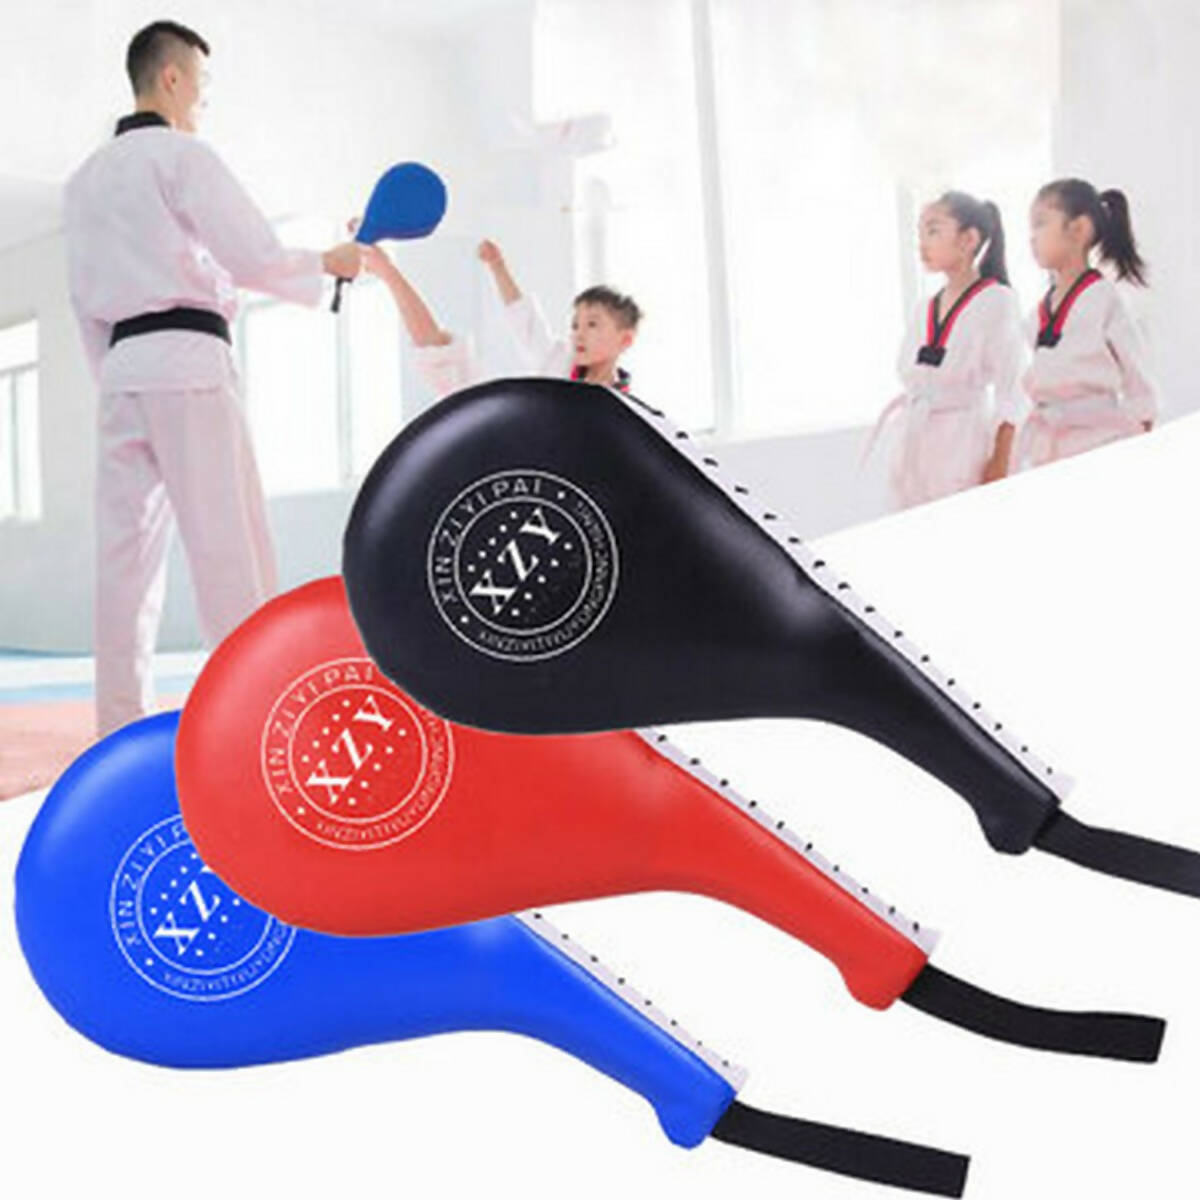 Taekwondo Double Kick Pad Target Tae Kwon Do Karate Kickboxing Training Gear Boxing Target Boxing Training for Adult/Child - Type A